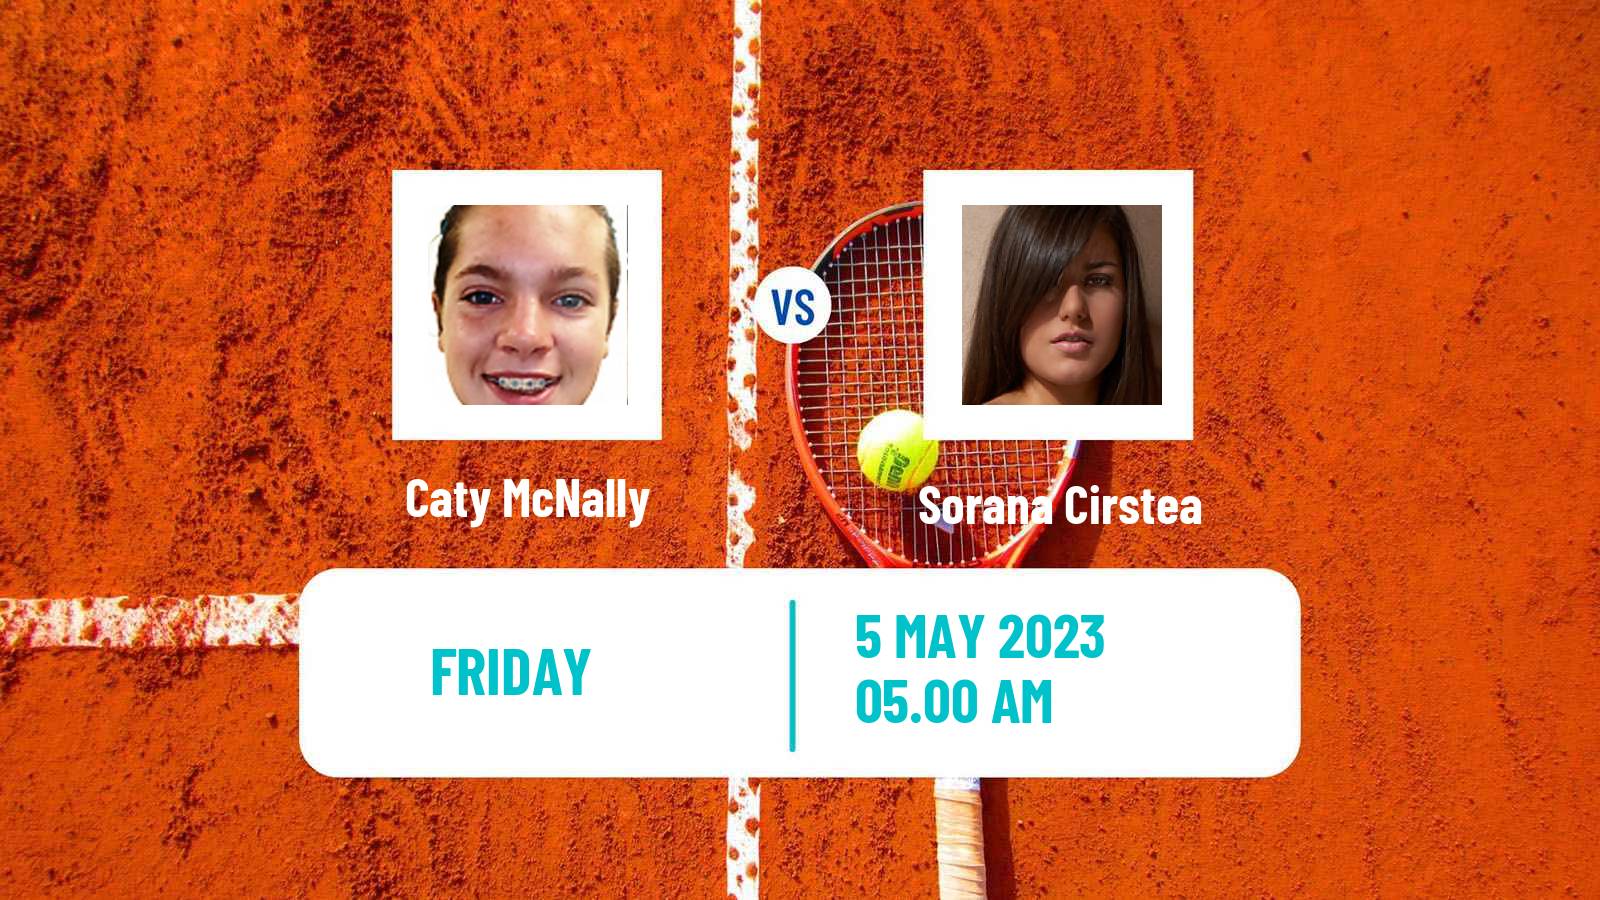 Tennis ATP Challenger Caty McNally - Sorana Cirstea